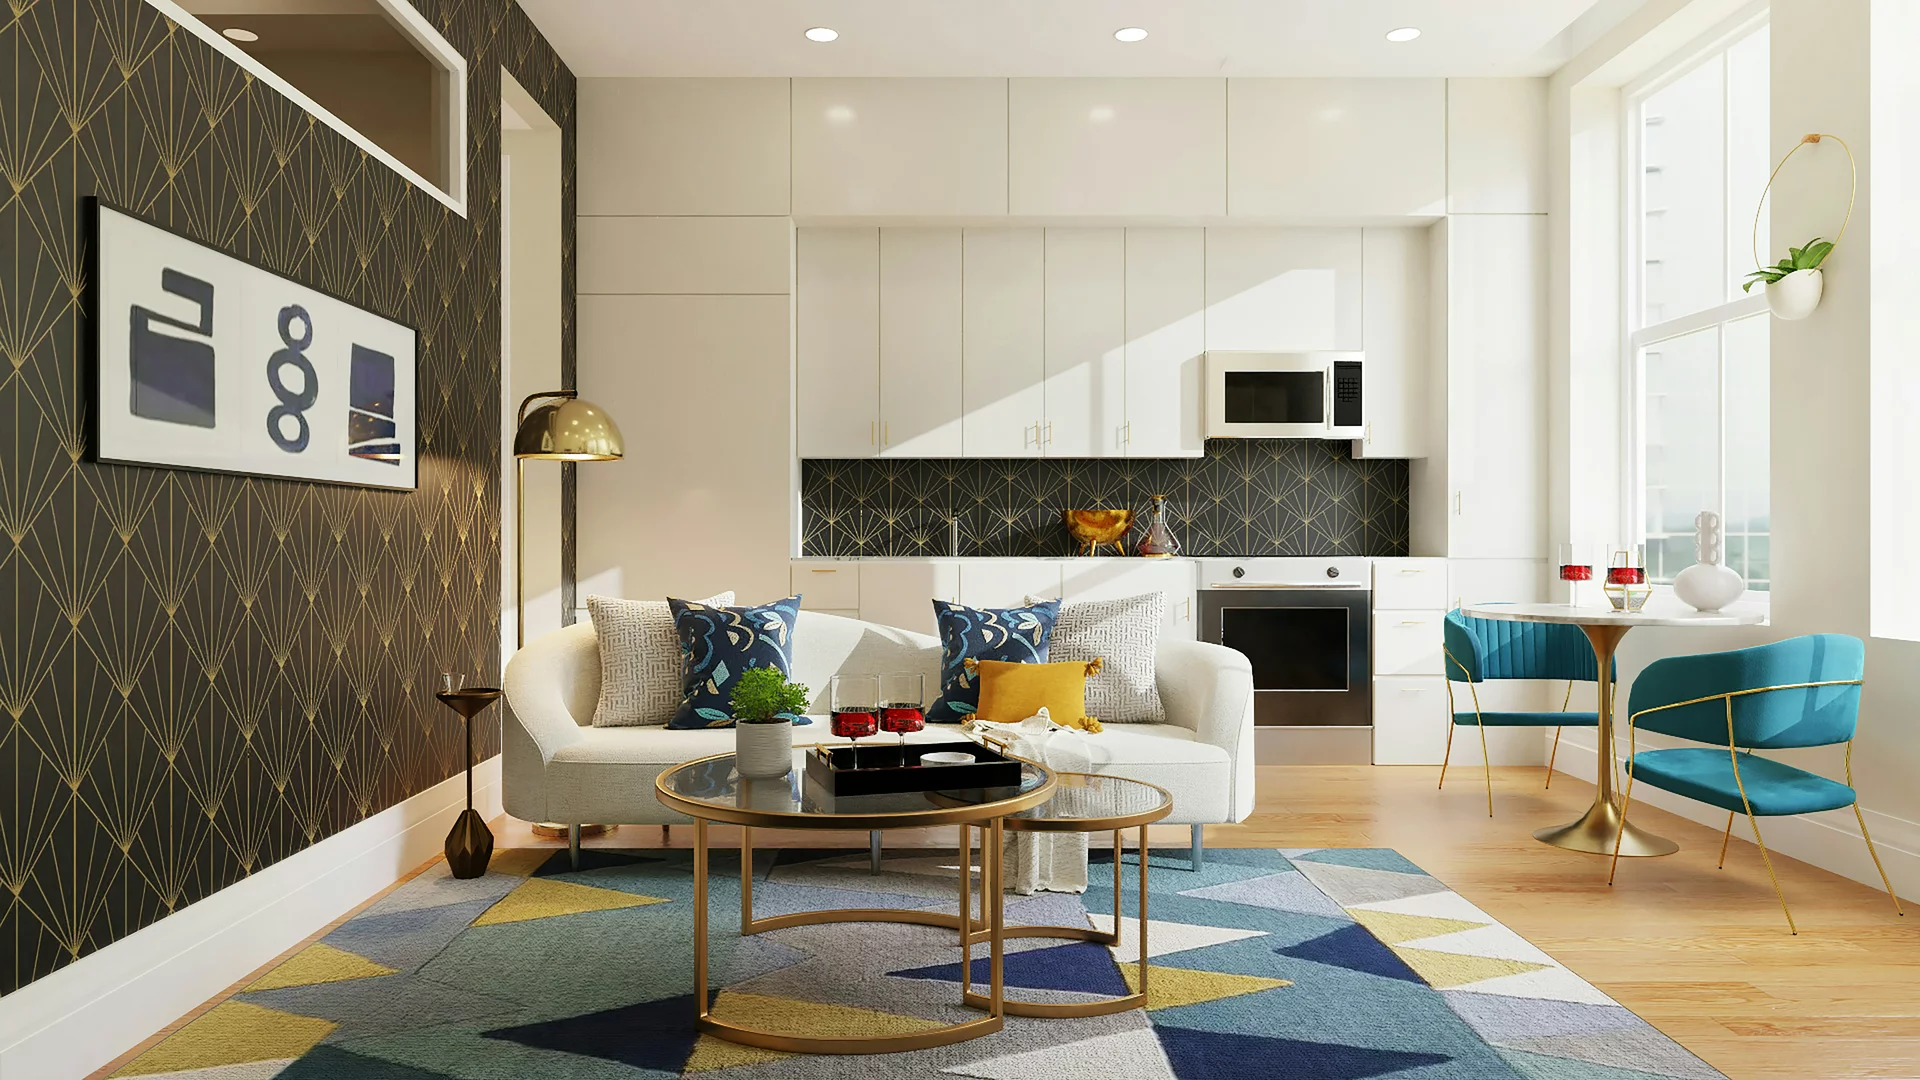 Bright kitchen and small light sofa with bright decorative elements in a studio apartment